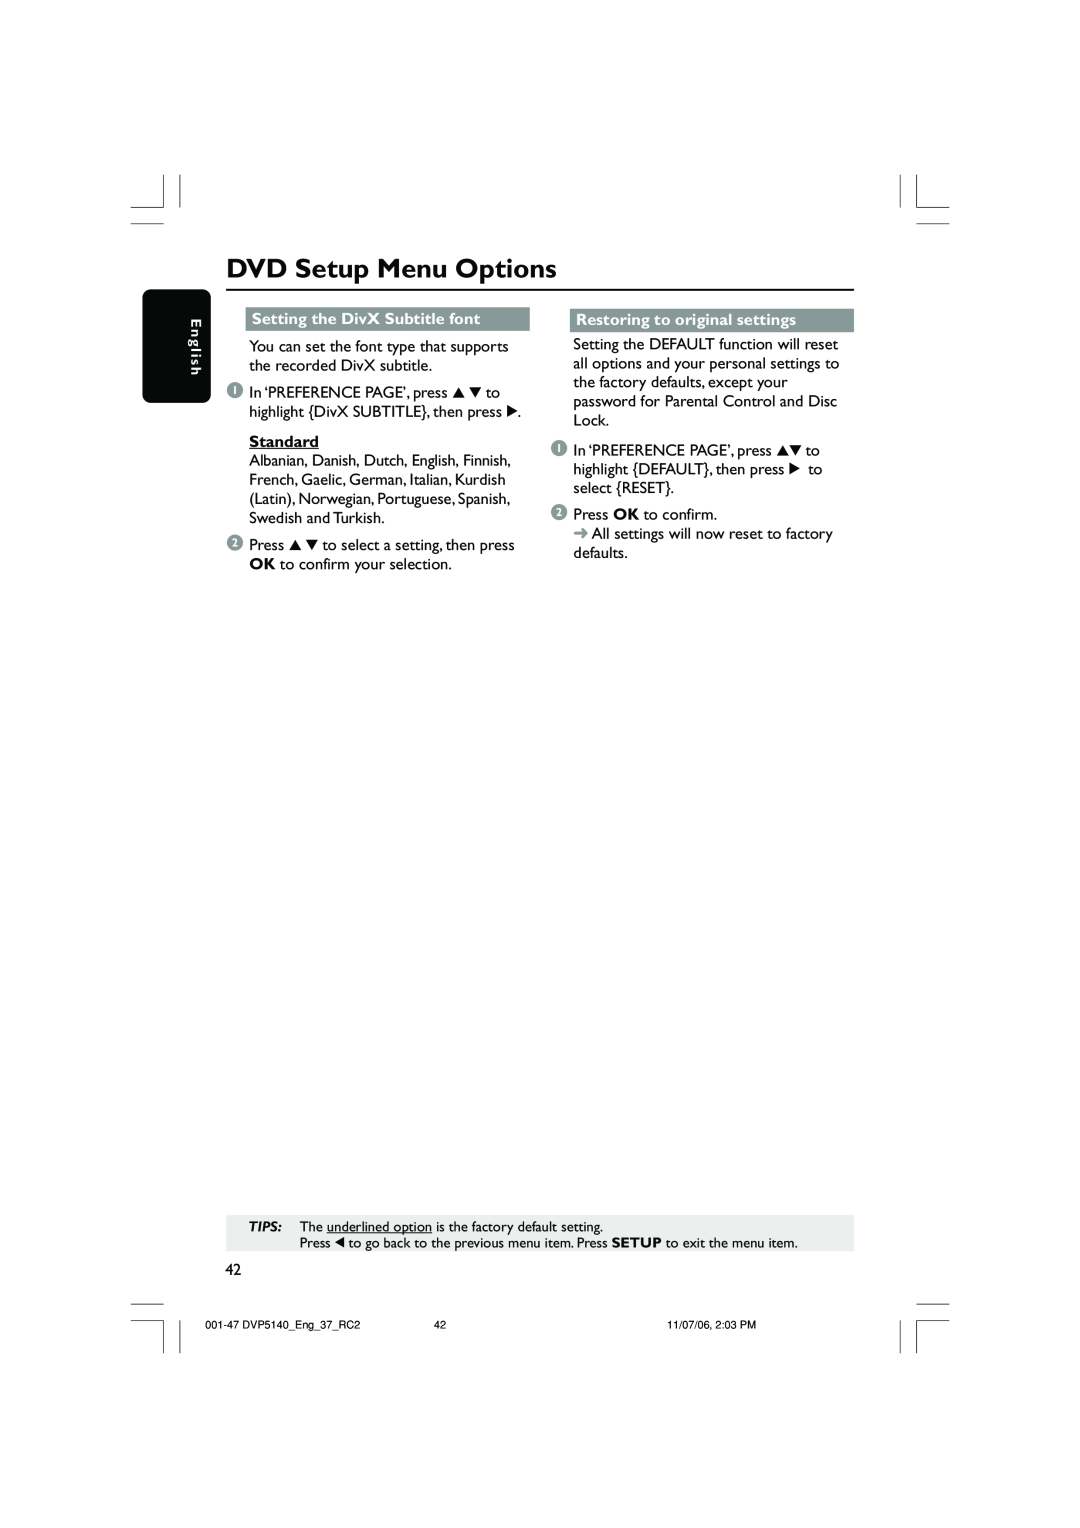 Philips DVP5140 DVD Setup Menu Options, Setting the DivX Subtitle font, Restoring to original settings, Standard 